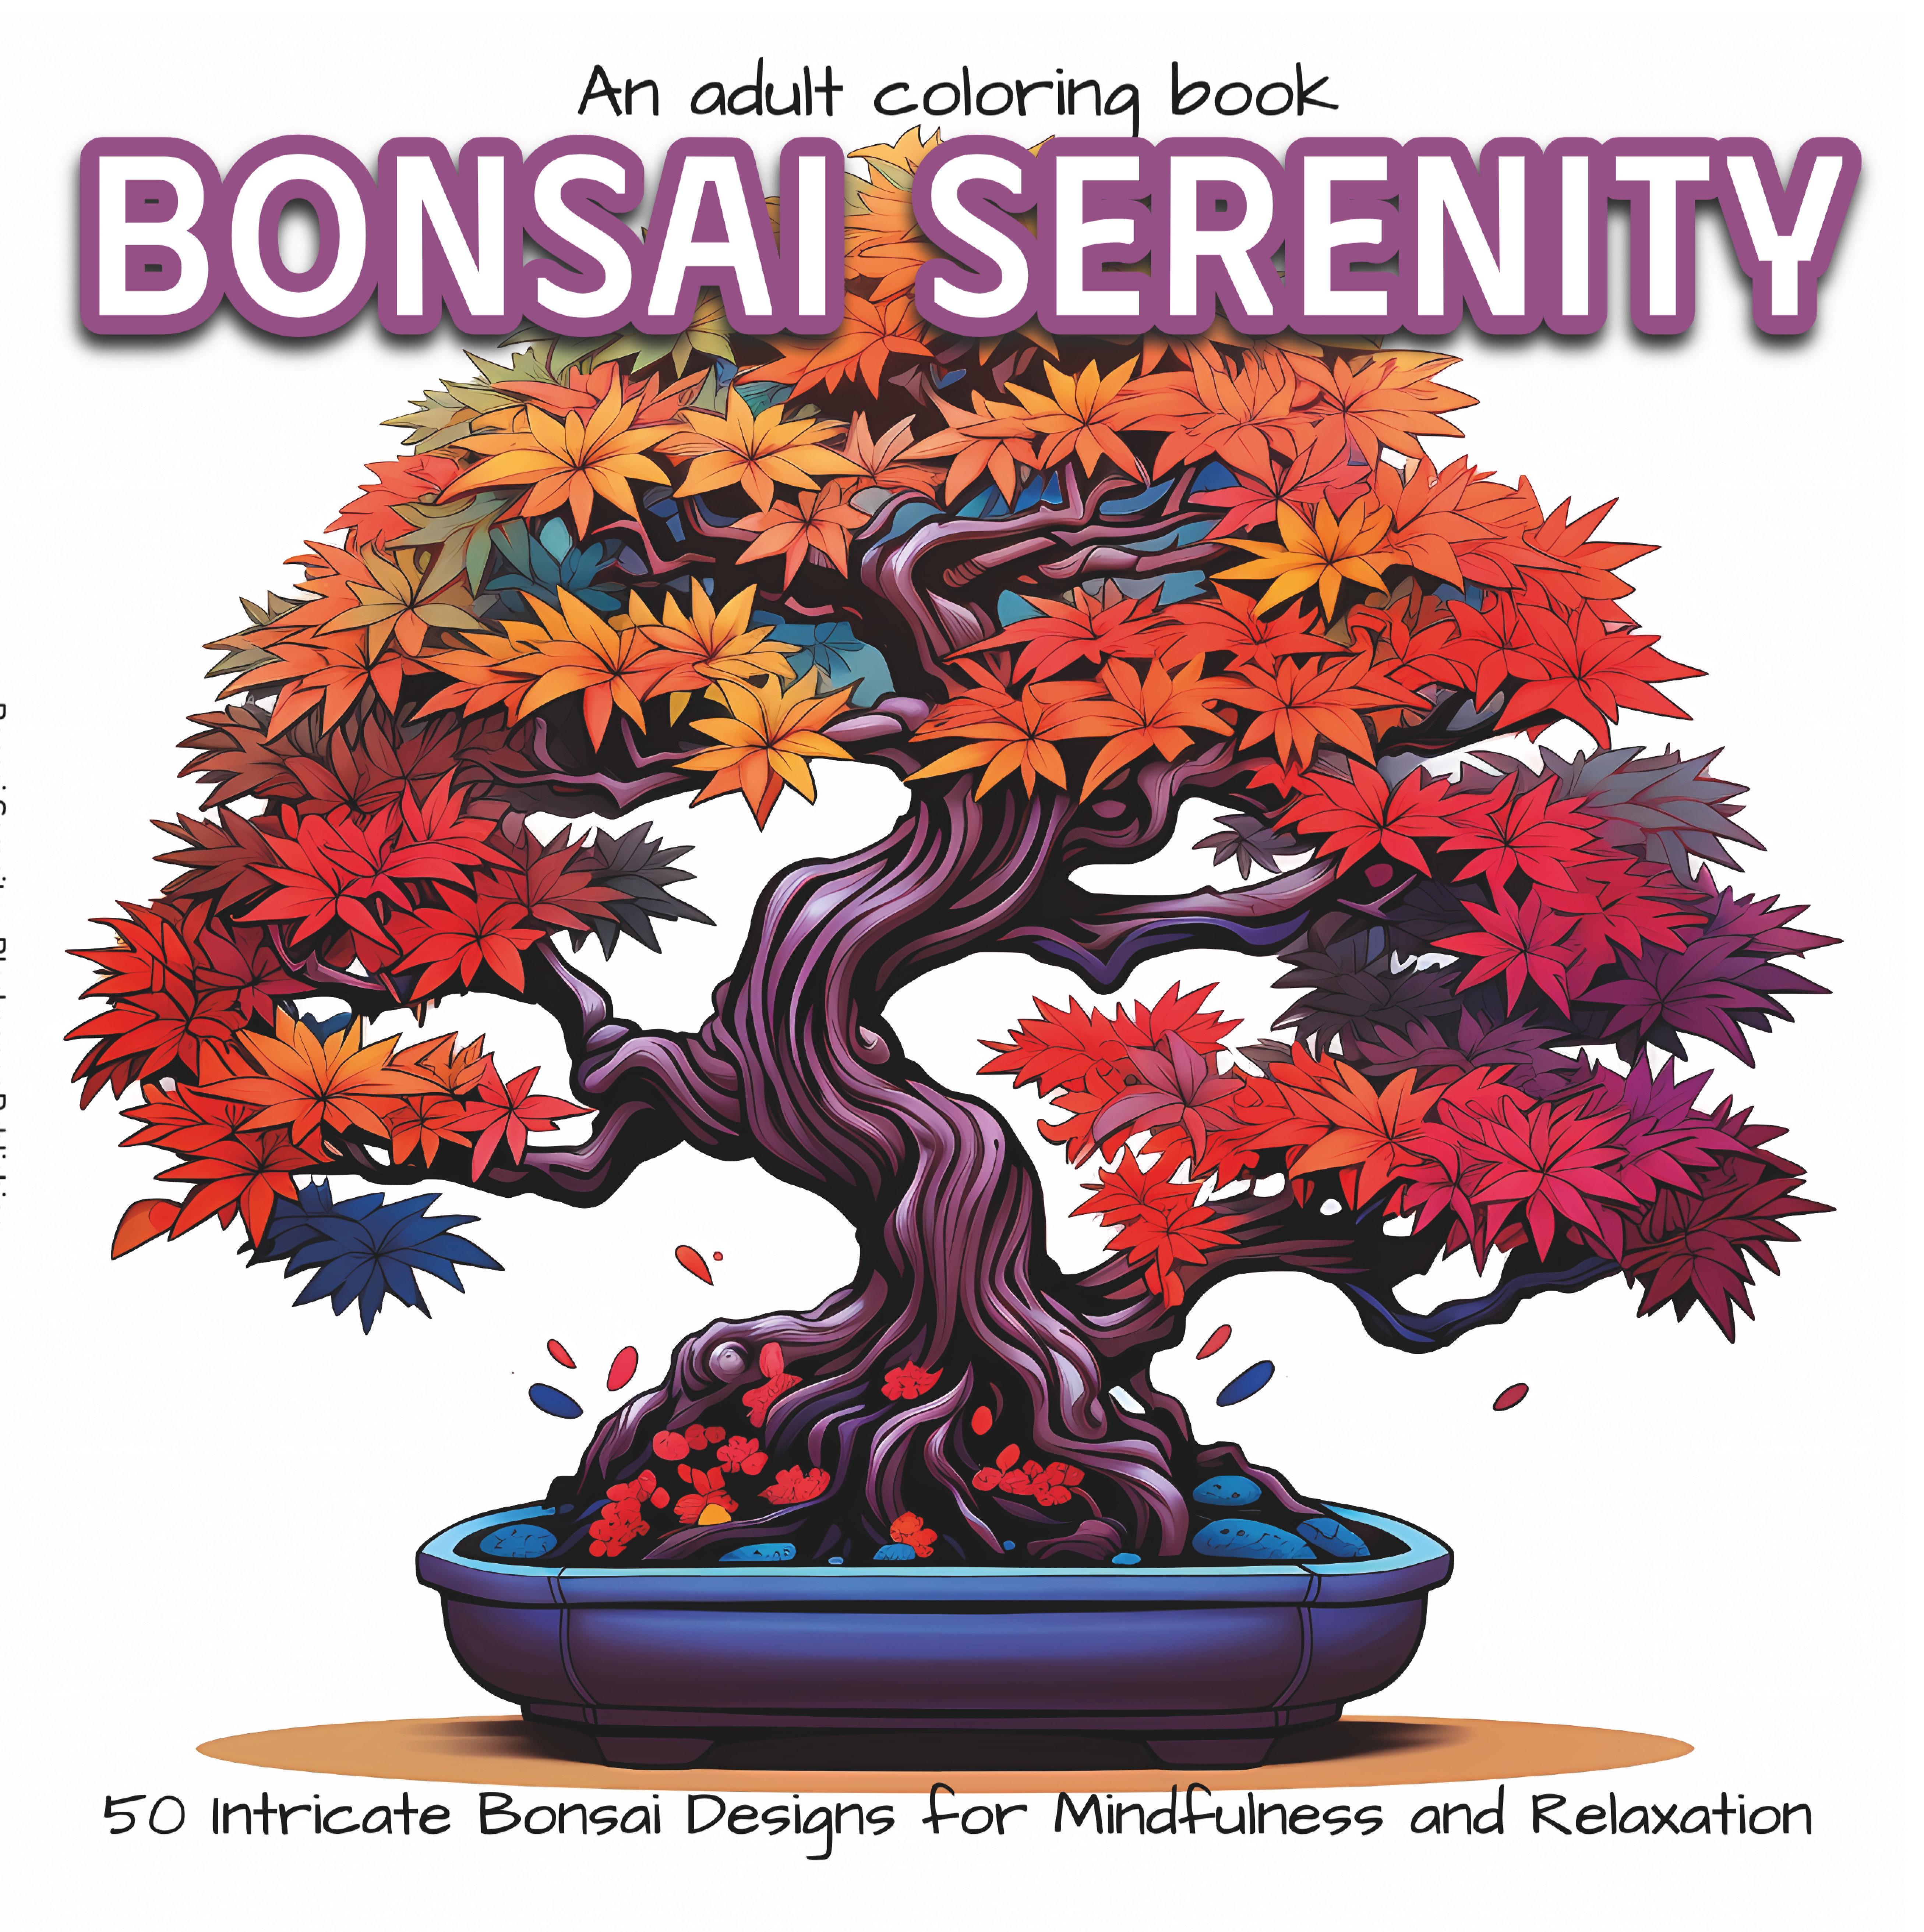 Bonsai serenity coloring book cover